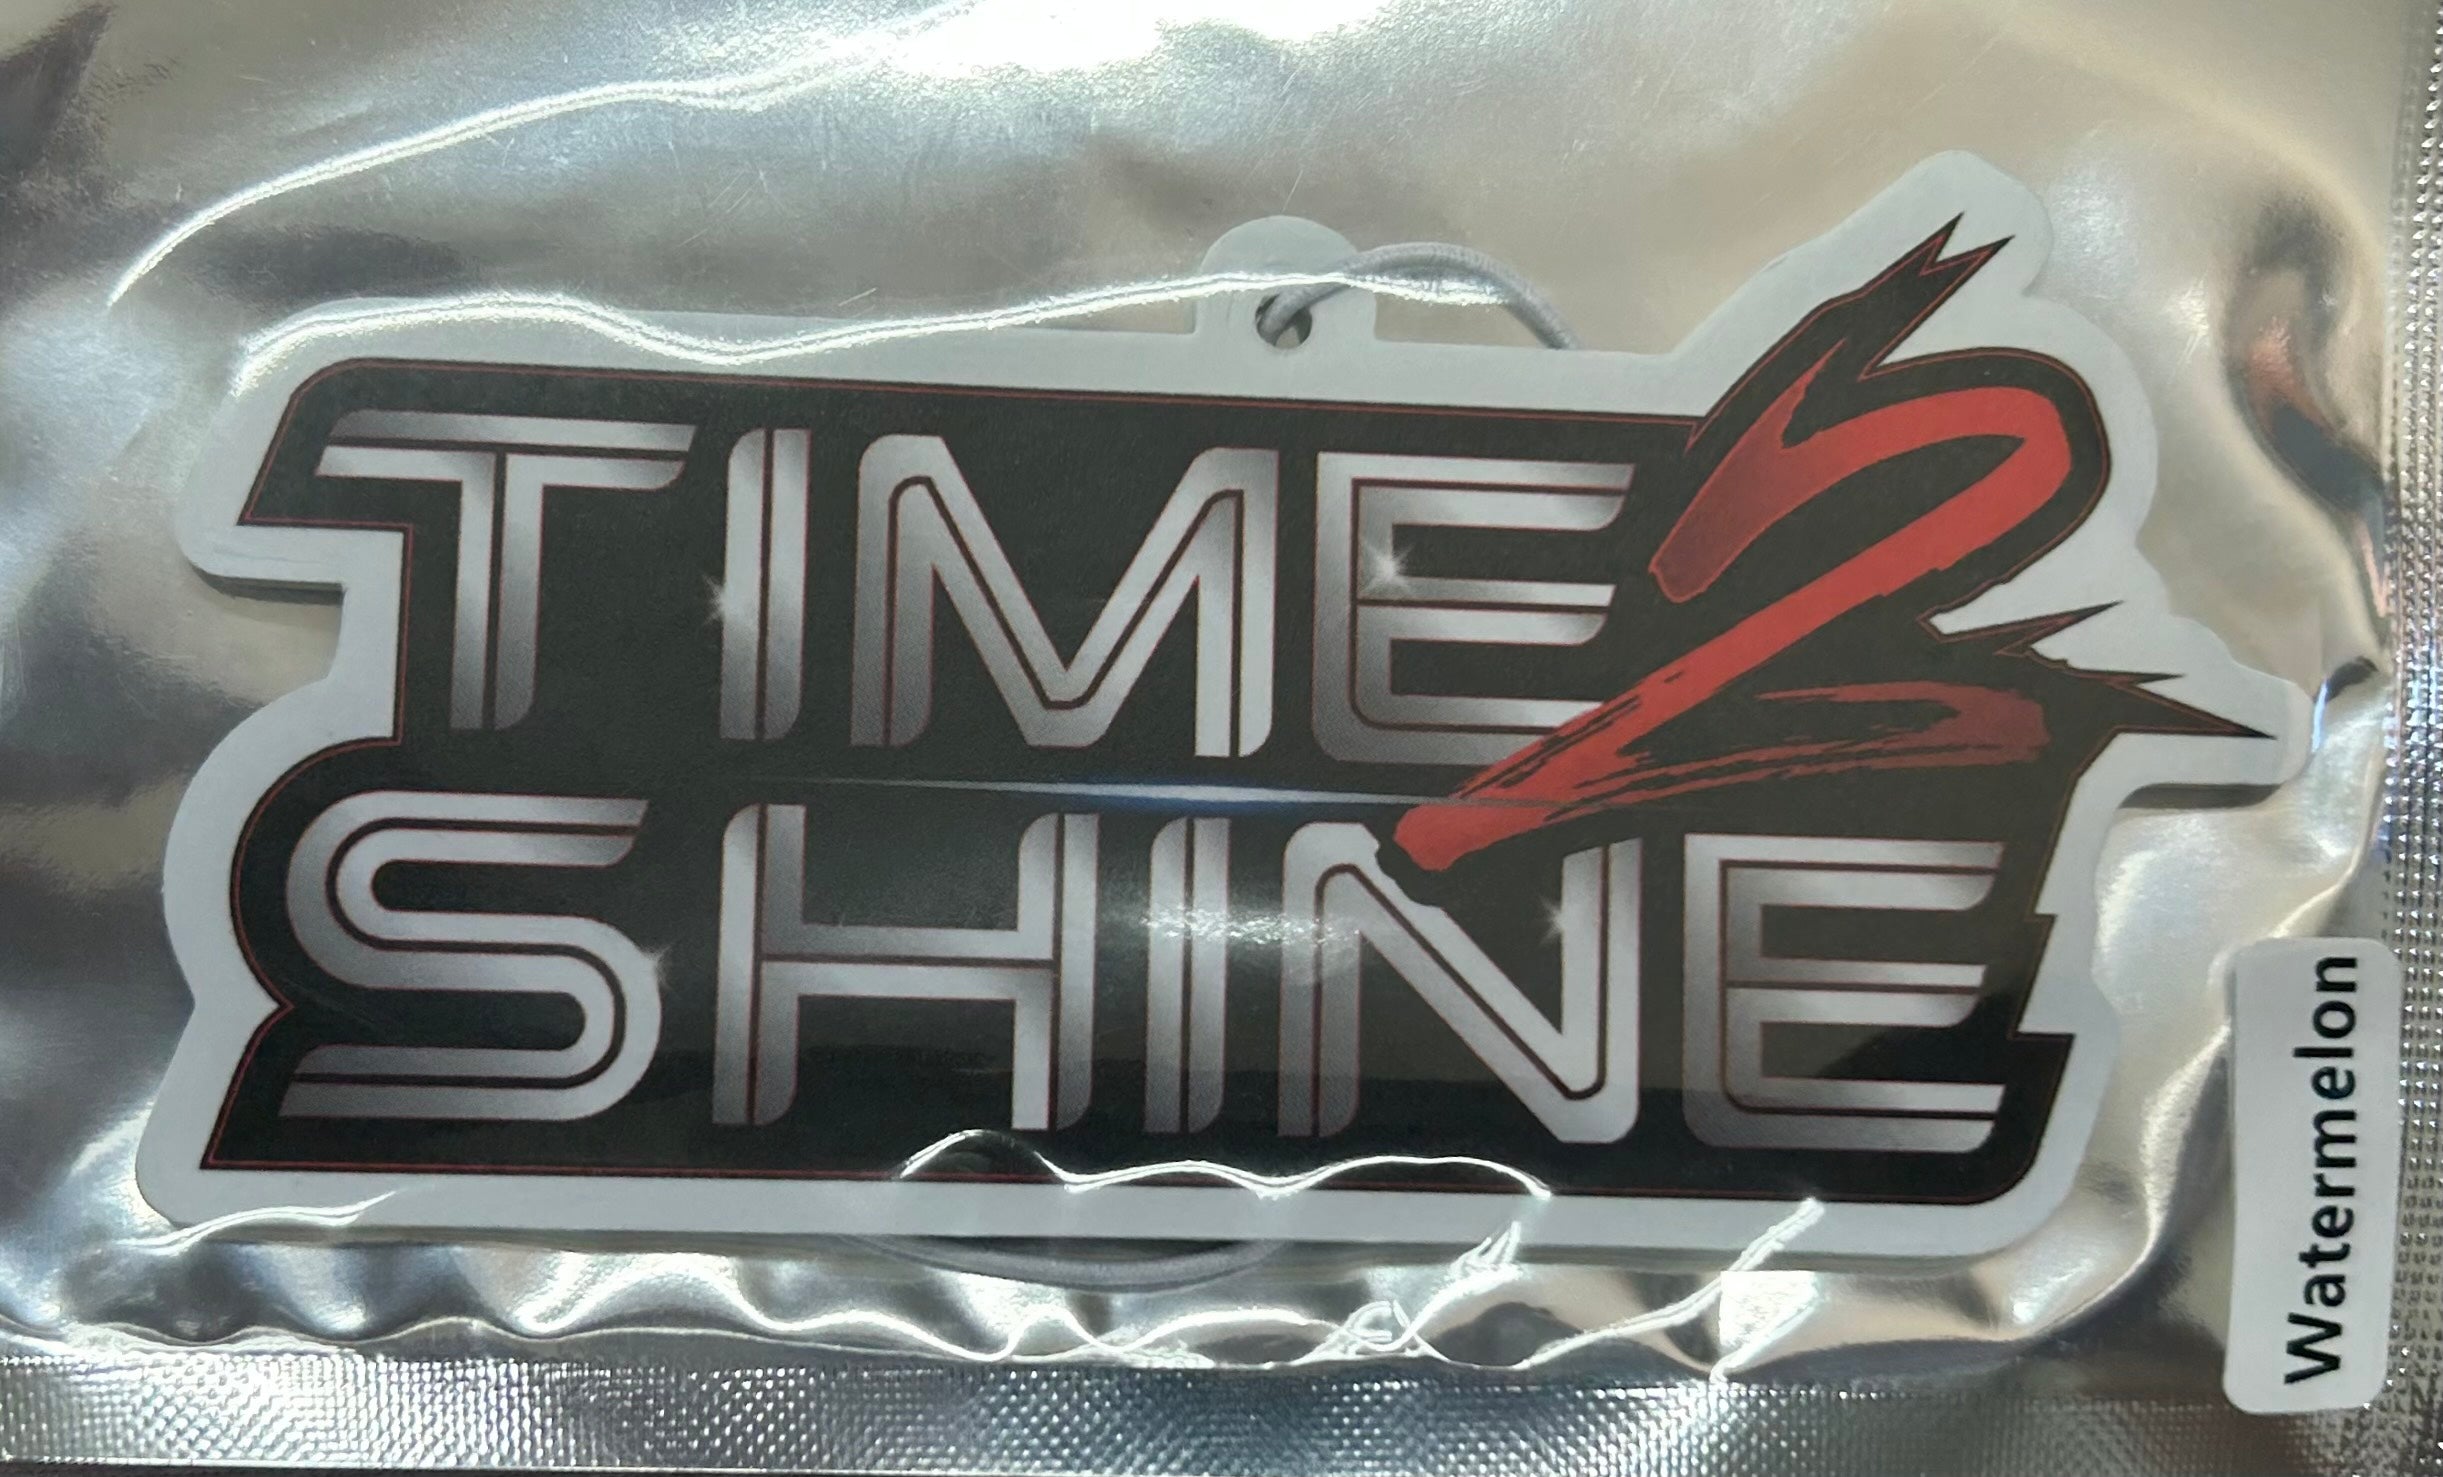 Time 2 Shine Cotton Candy Air Freshener - Go Shine On